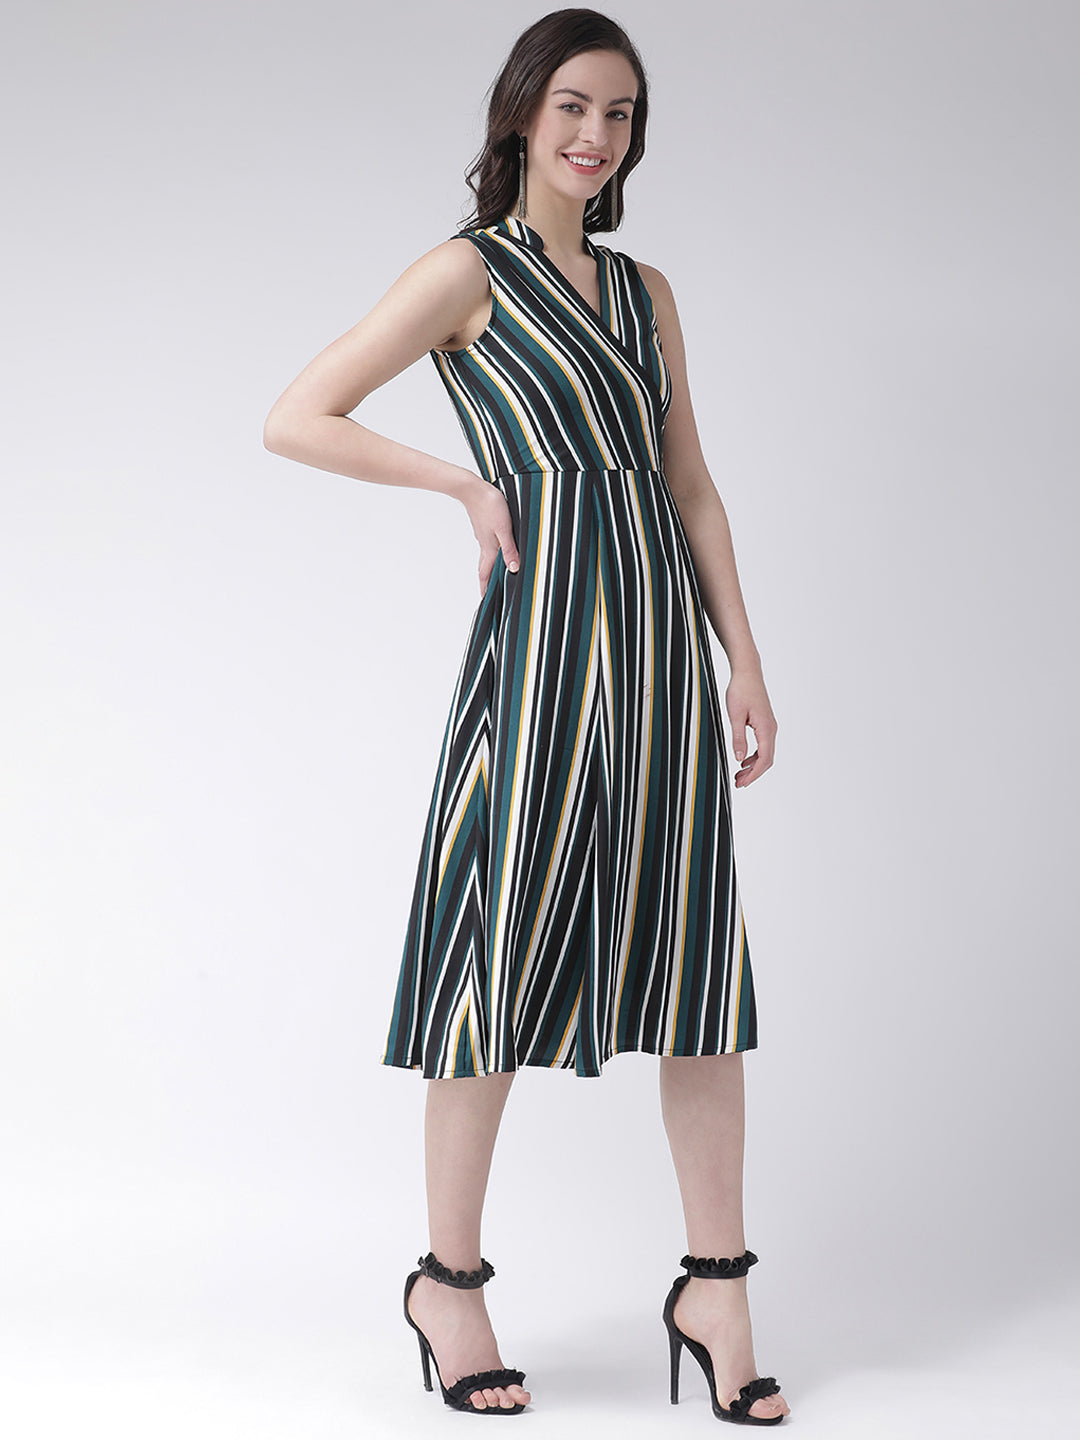 Godet Stripe Printed Dress